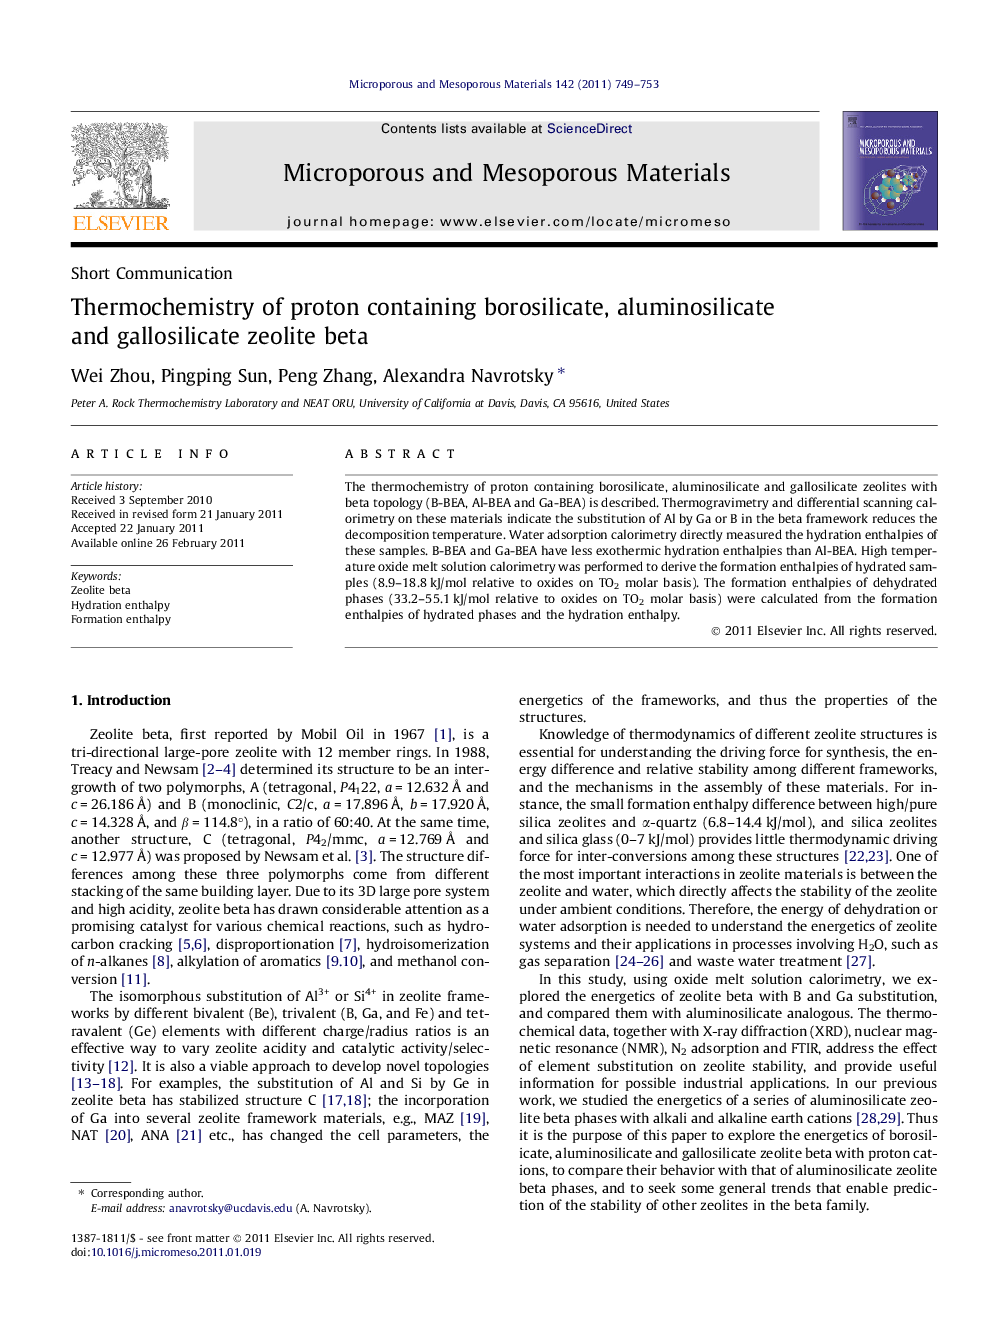 Thermochemistry of proton containing borosilicate, aluminosilicate and gallosilicate zeolite beta